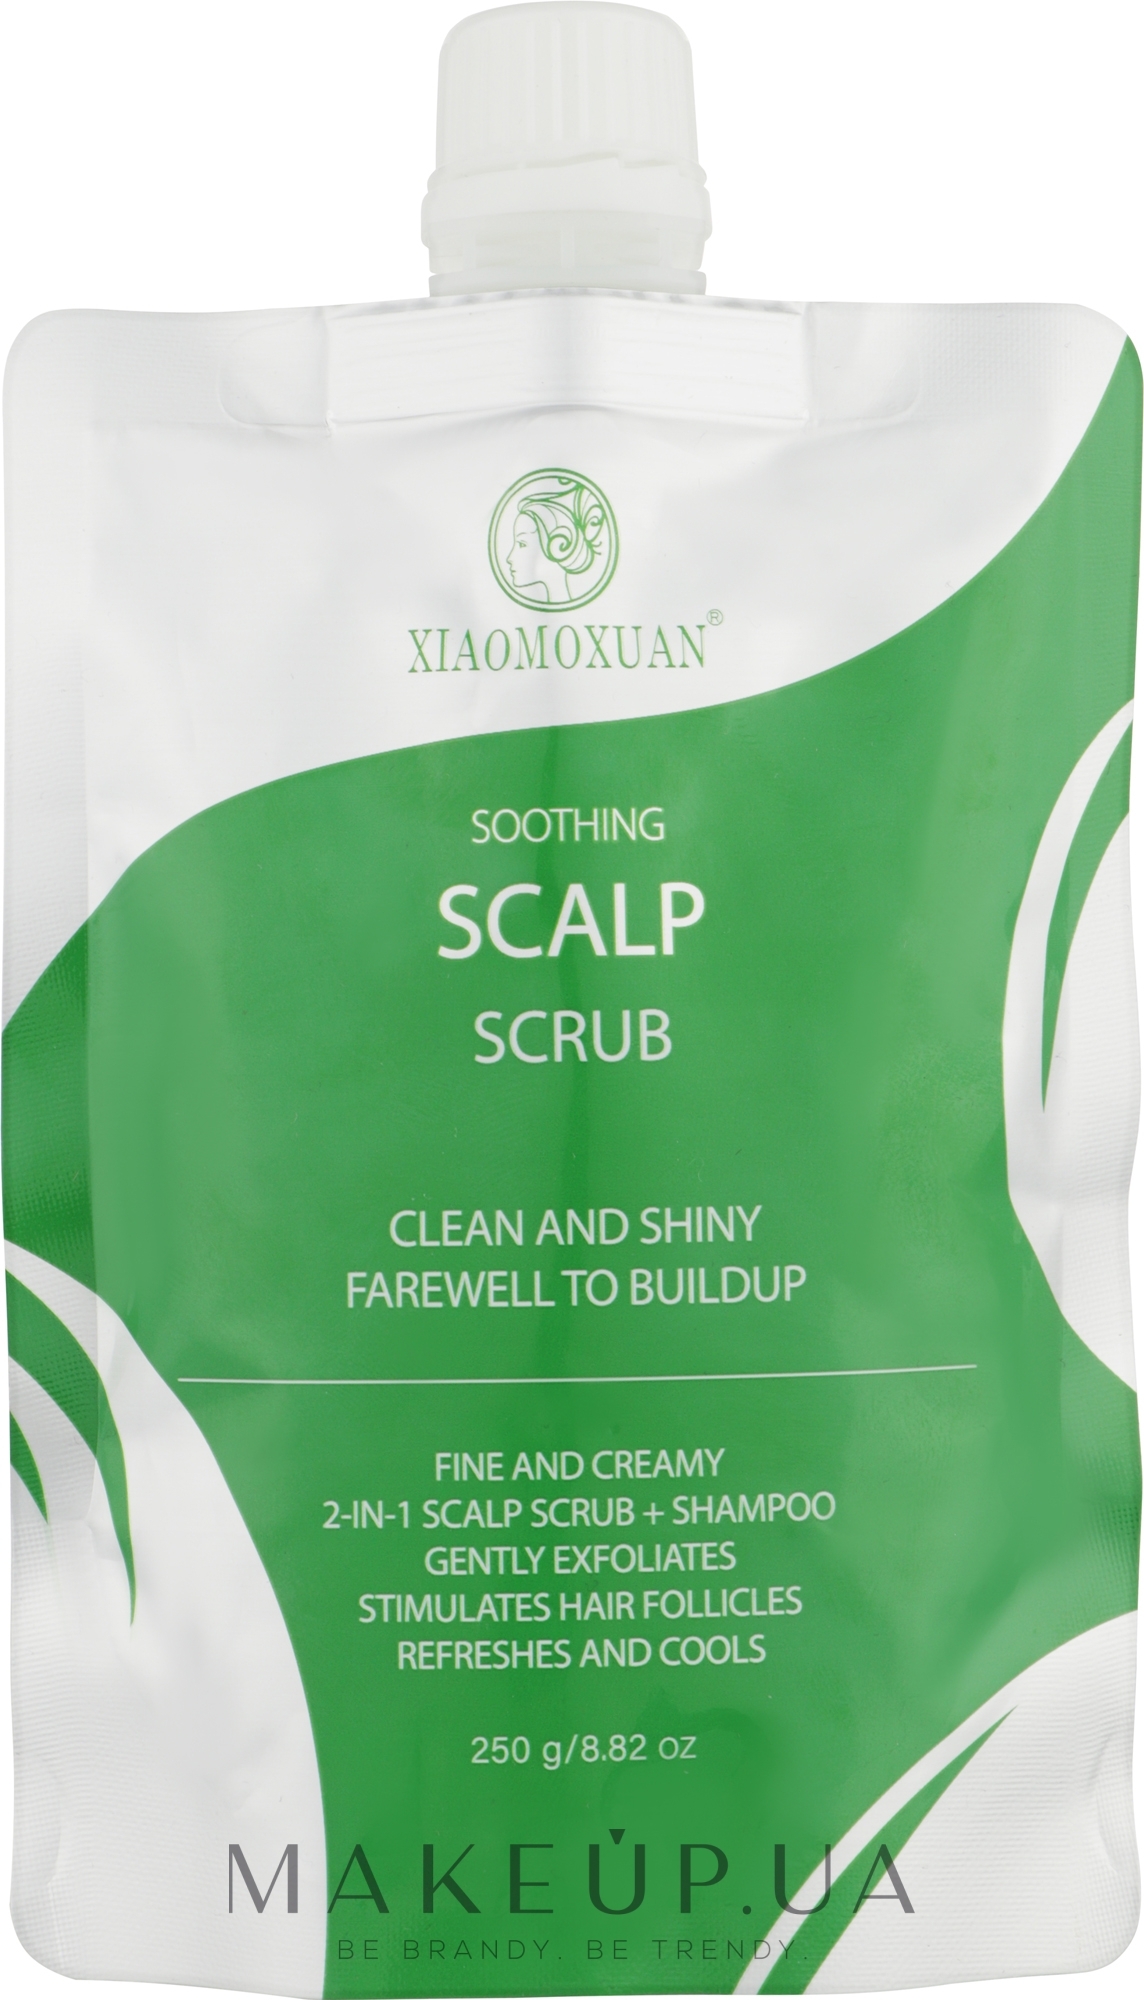 Скраб-шампунь для волос - Xiaomoxuan Soothing Scalp Scrub — фото 250g